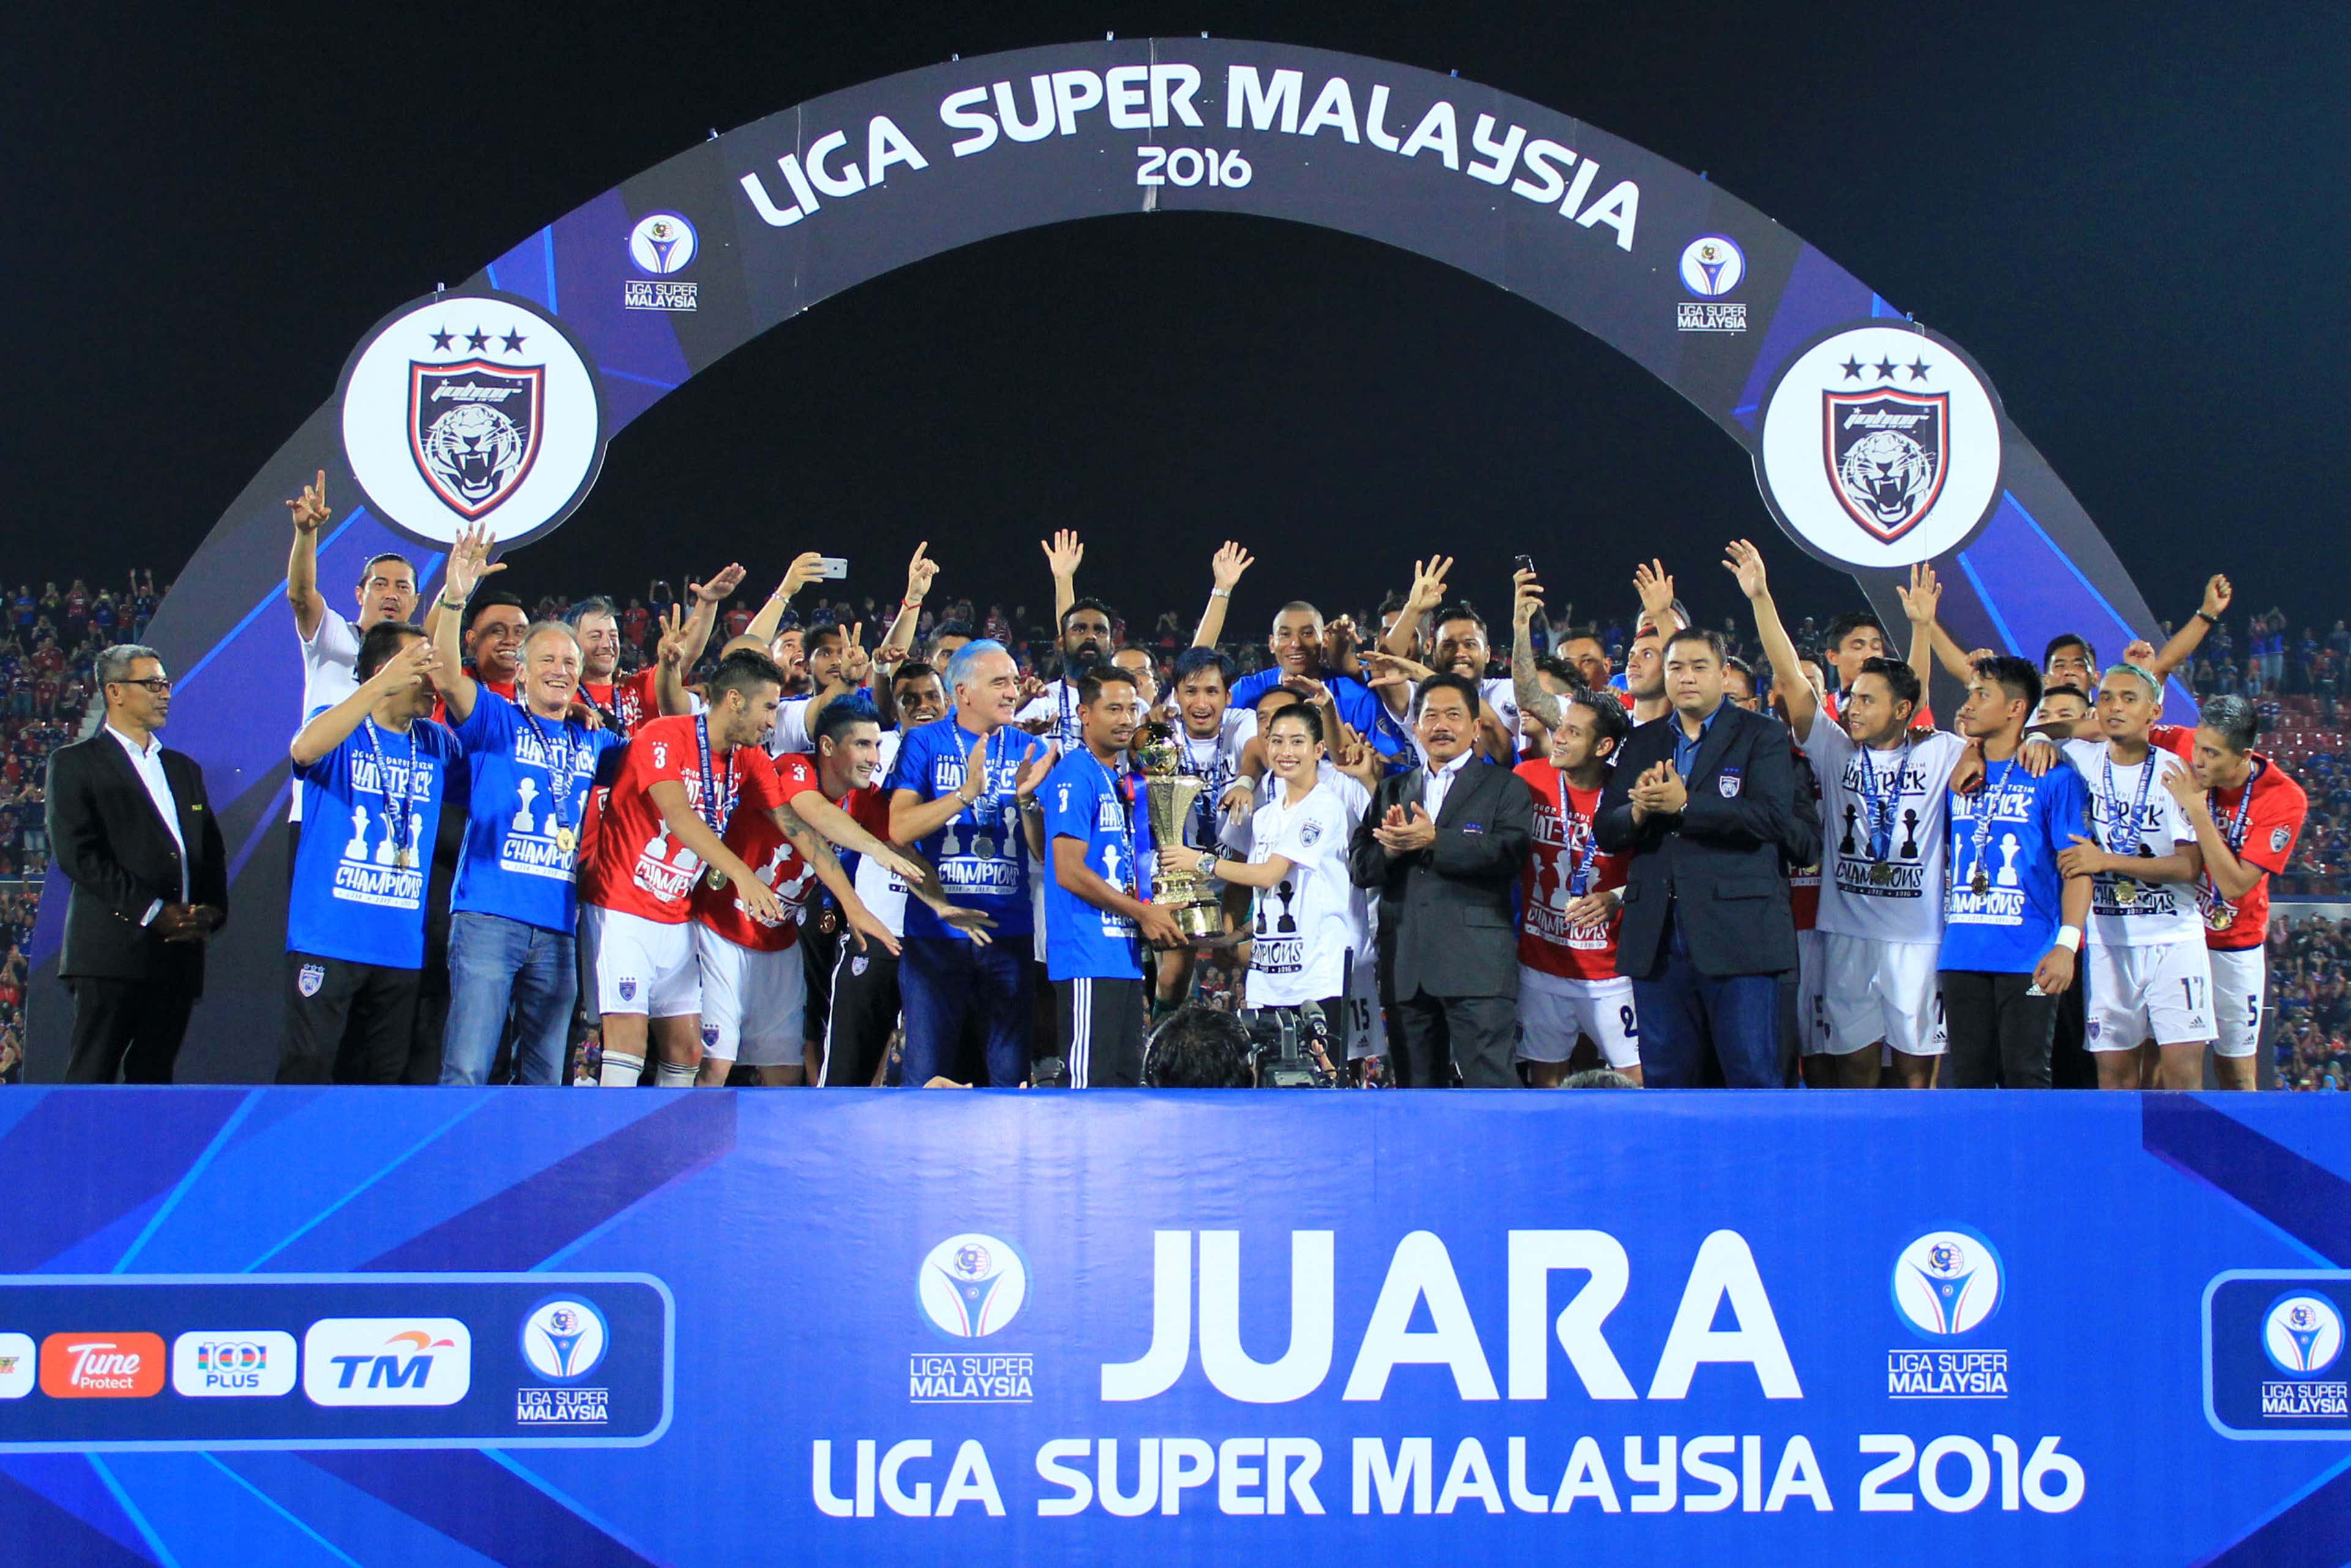 Johor Darul Ta'zim lifts the Super League trophy